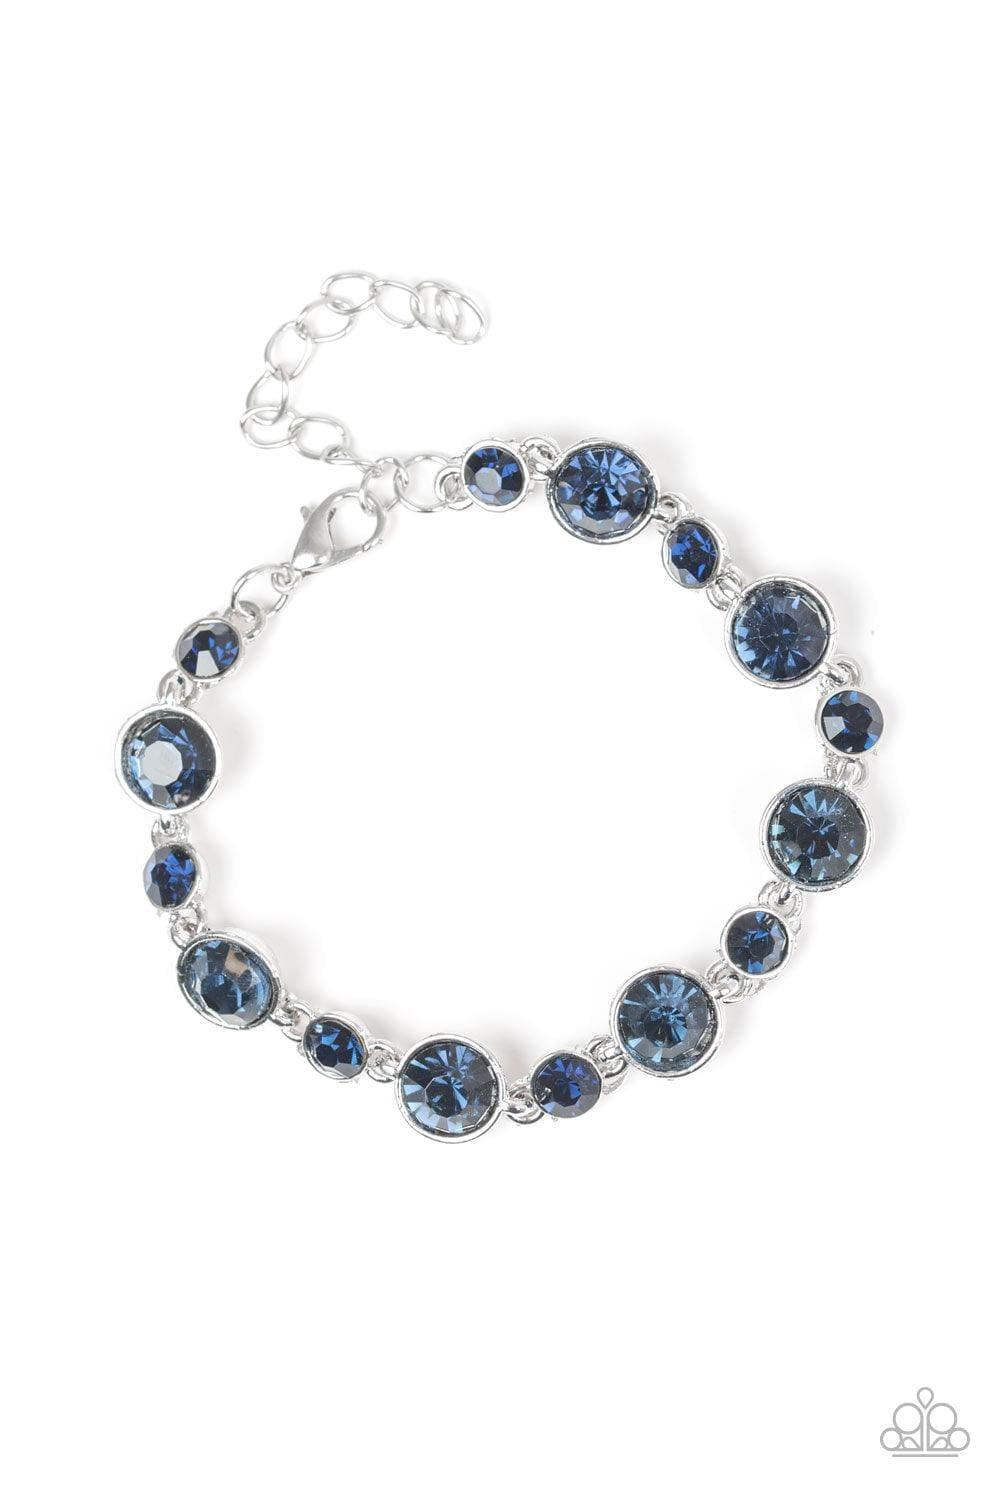 Paparazzi Accessories - Starstruck Sparkle - Blue Bracelet - Bling by JessieK